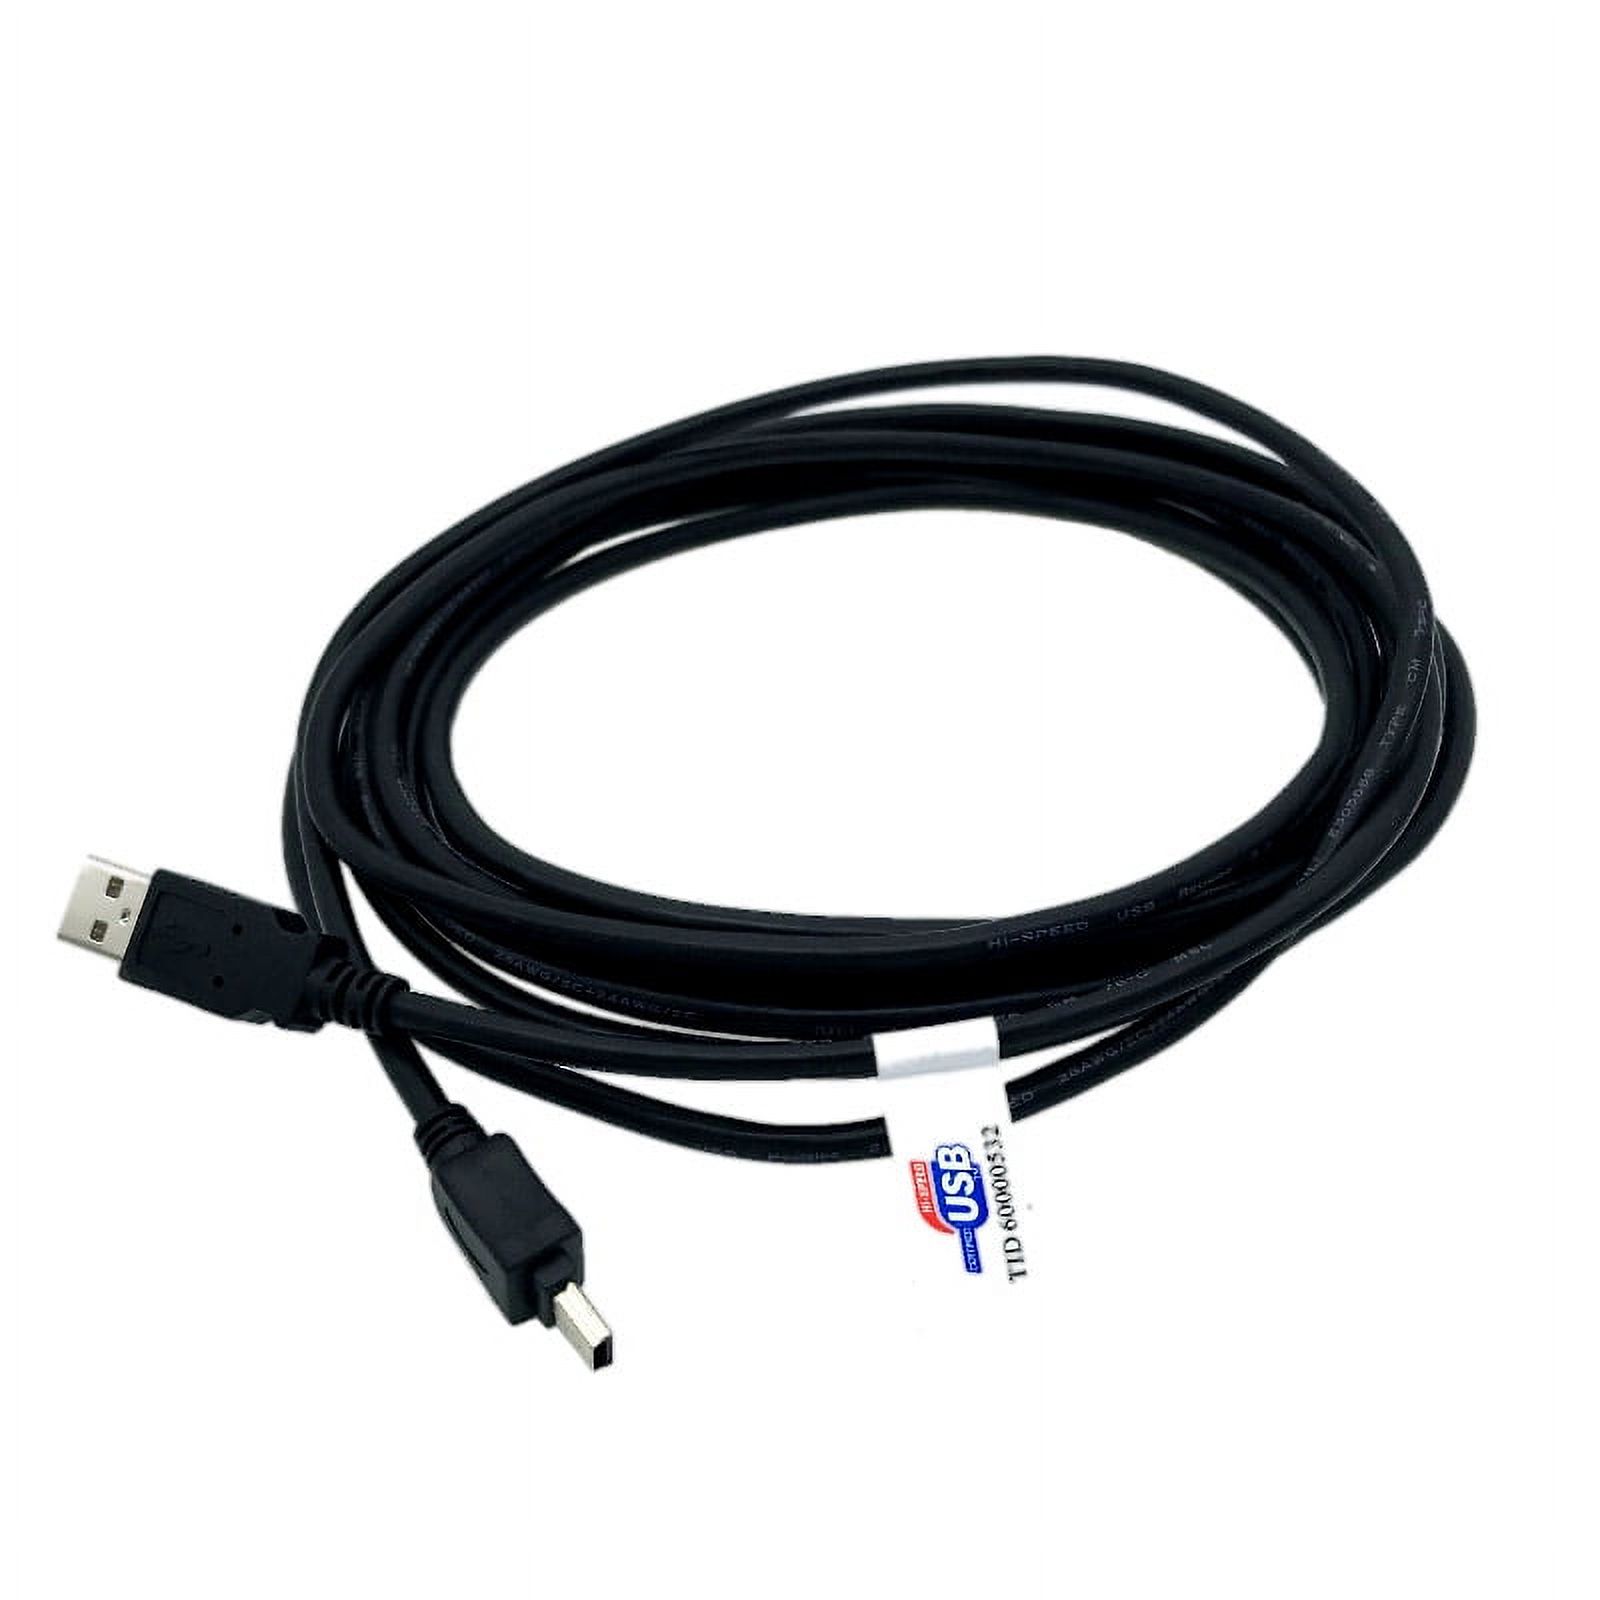 Kentek 15 Feet FT USB SYNC Cord Cable For MAGELLAN ROADMATE 300 360 700 760 800 860 860T 1220 Portable GPS - image 1 of 1